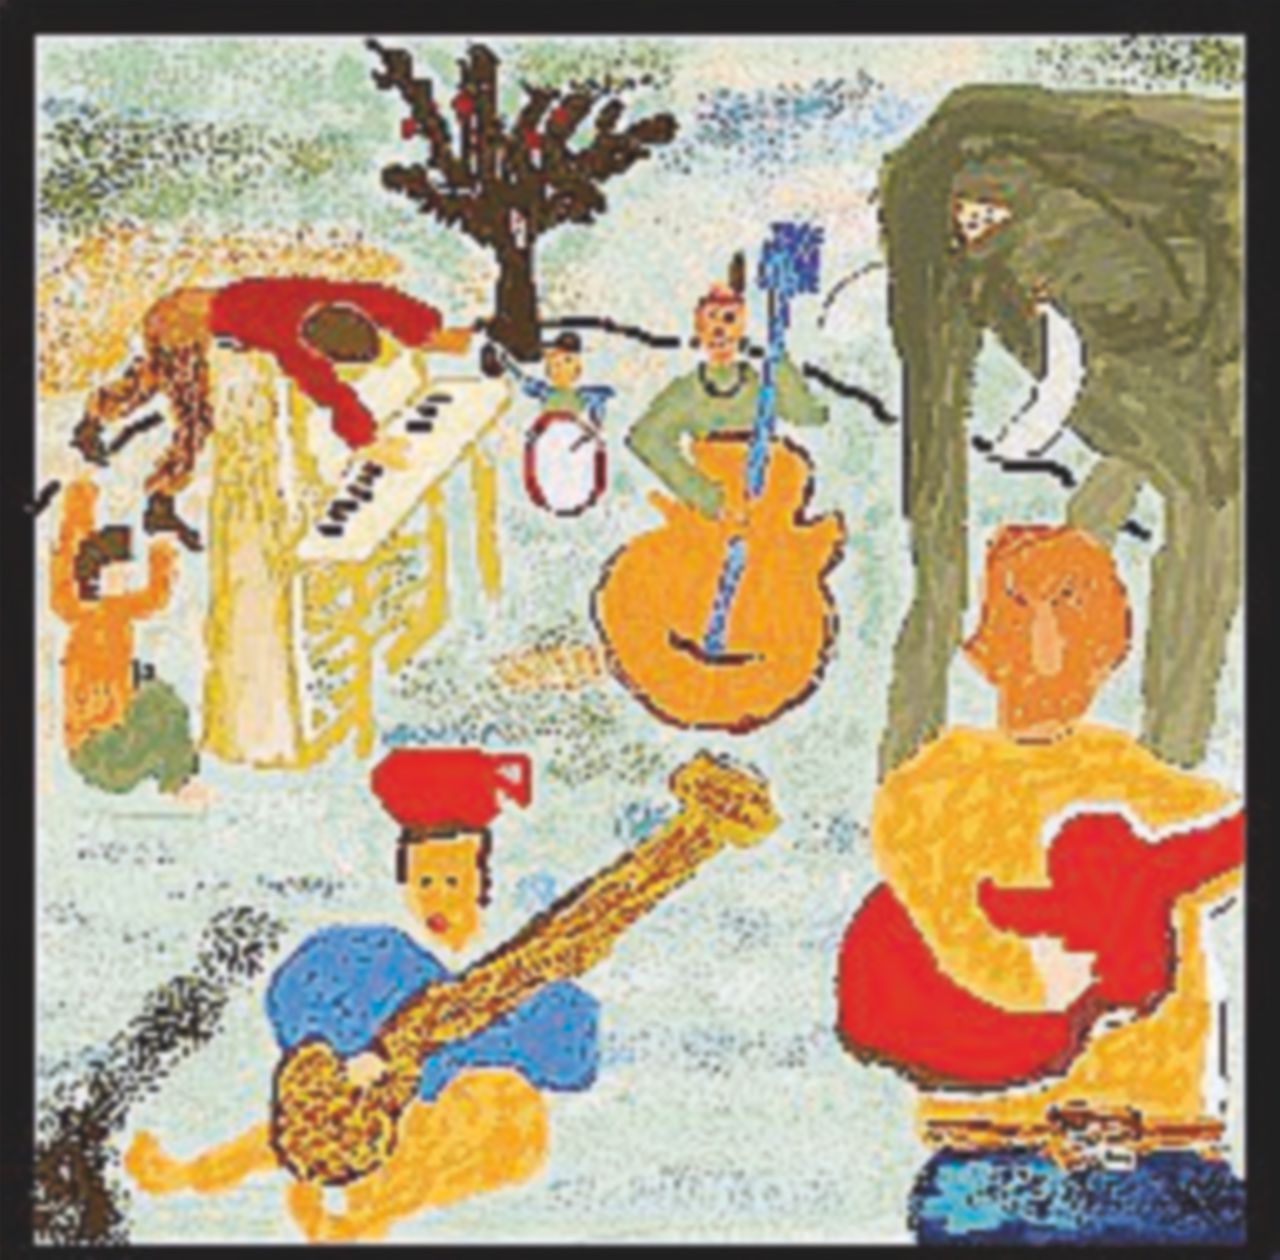 Copertina di “Music from the big pink” la firma di Dylan sulla Band